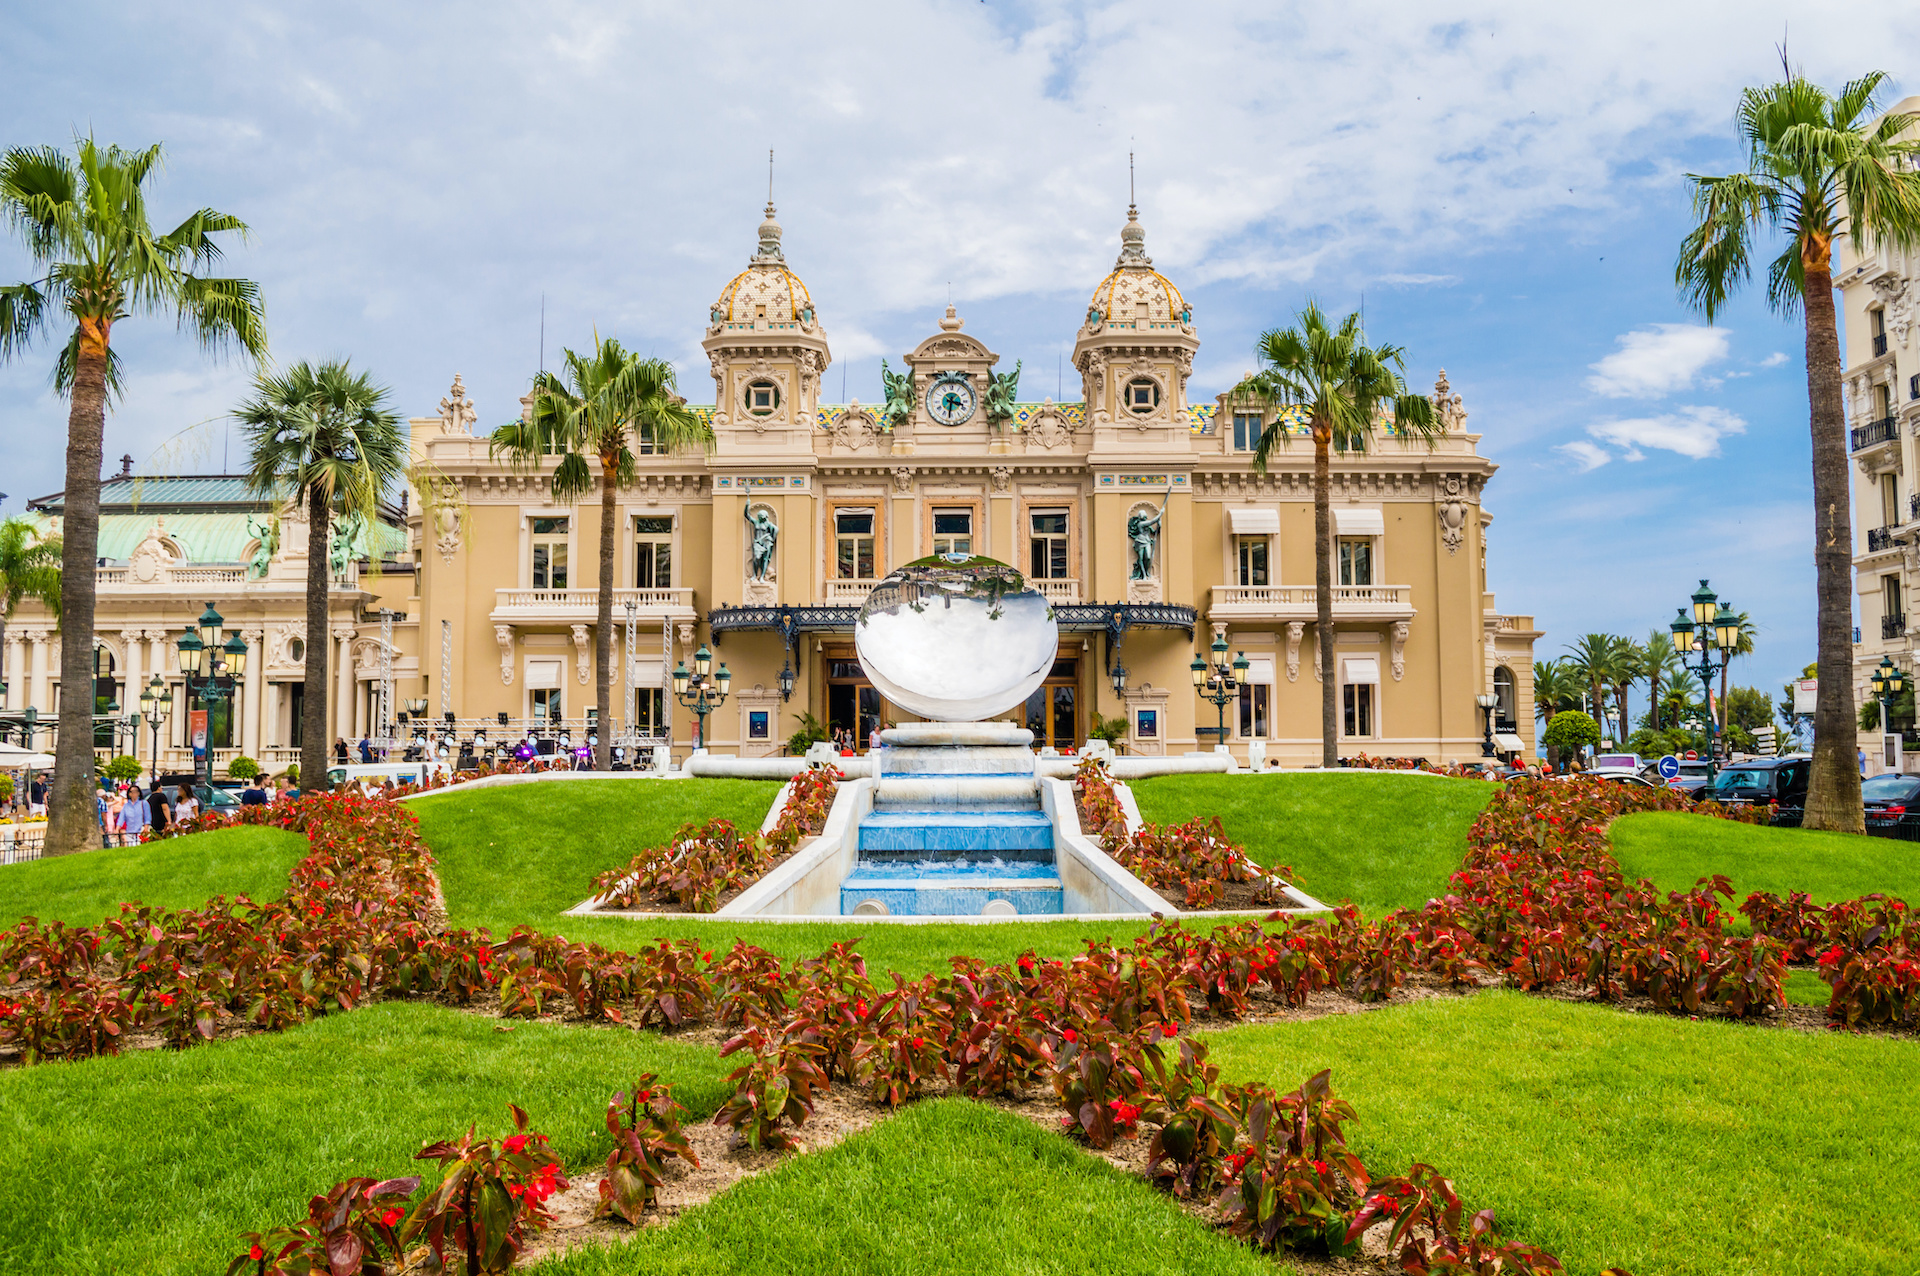 Photo: Monte Carlo Casino, Monaco | Credit: Andrii_Lutsyk, Adobe Stock